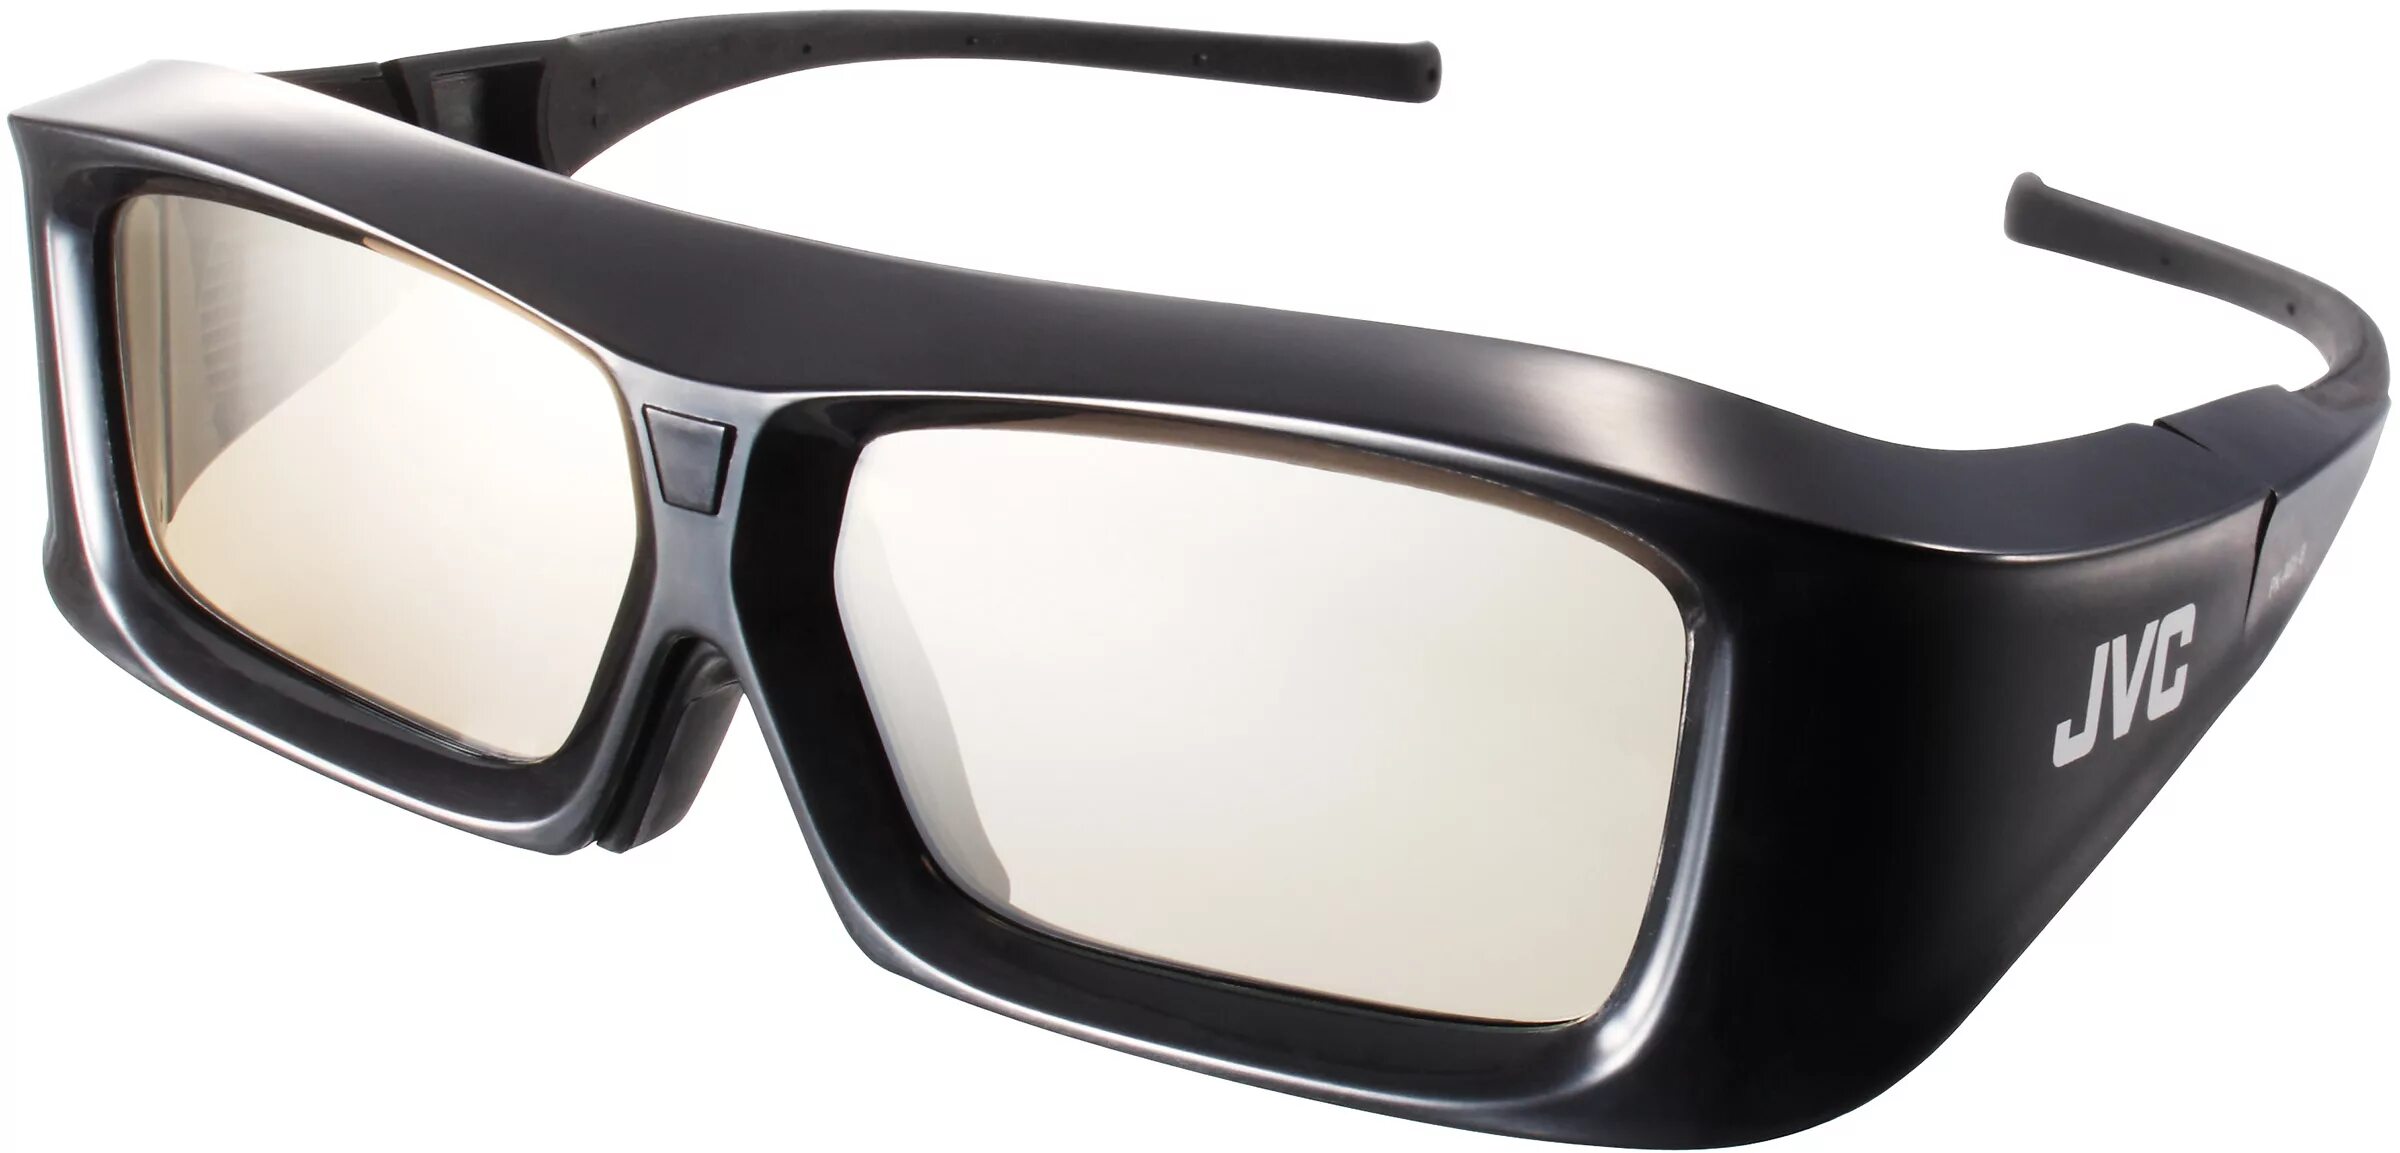 3d очки JVC (pk-ag3g). 3d очки JVC PNG. 3d очки для Side by Side. 3d очки для проектора VIEWSONIC.